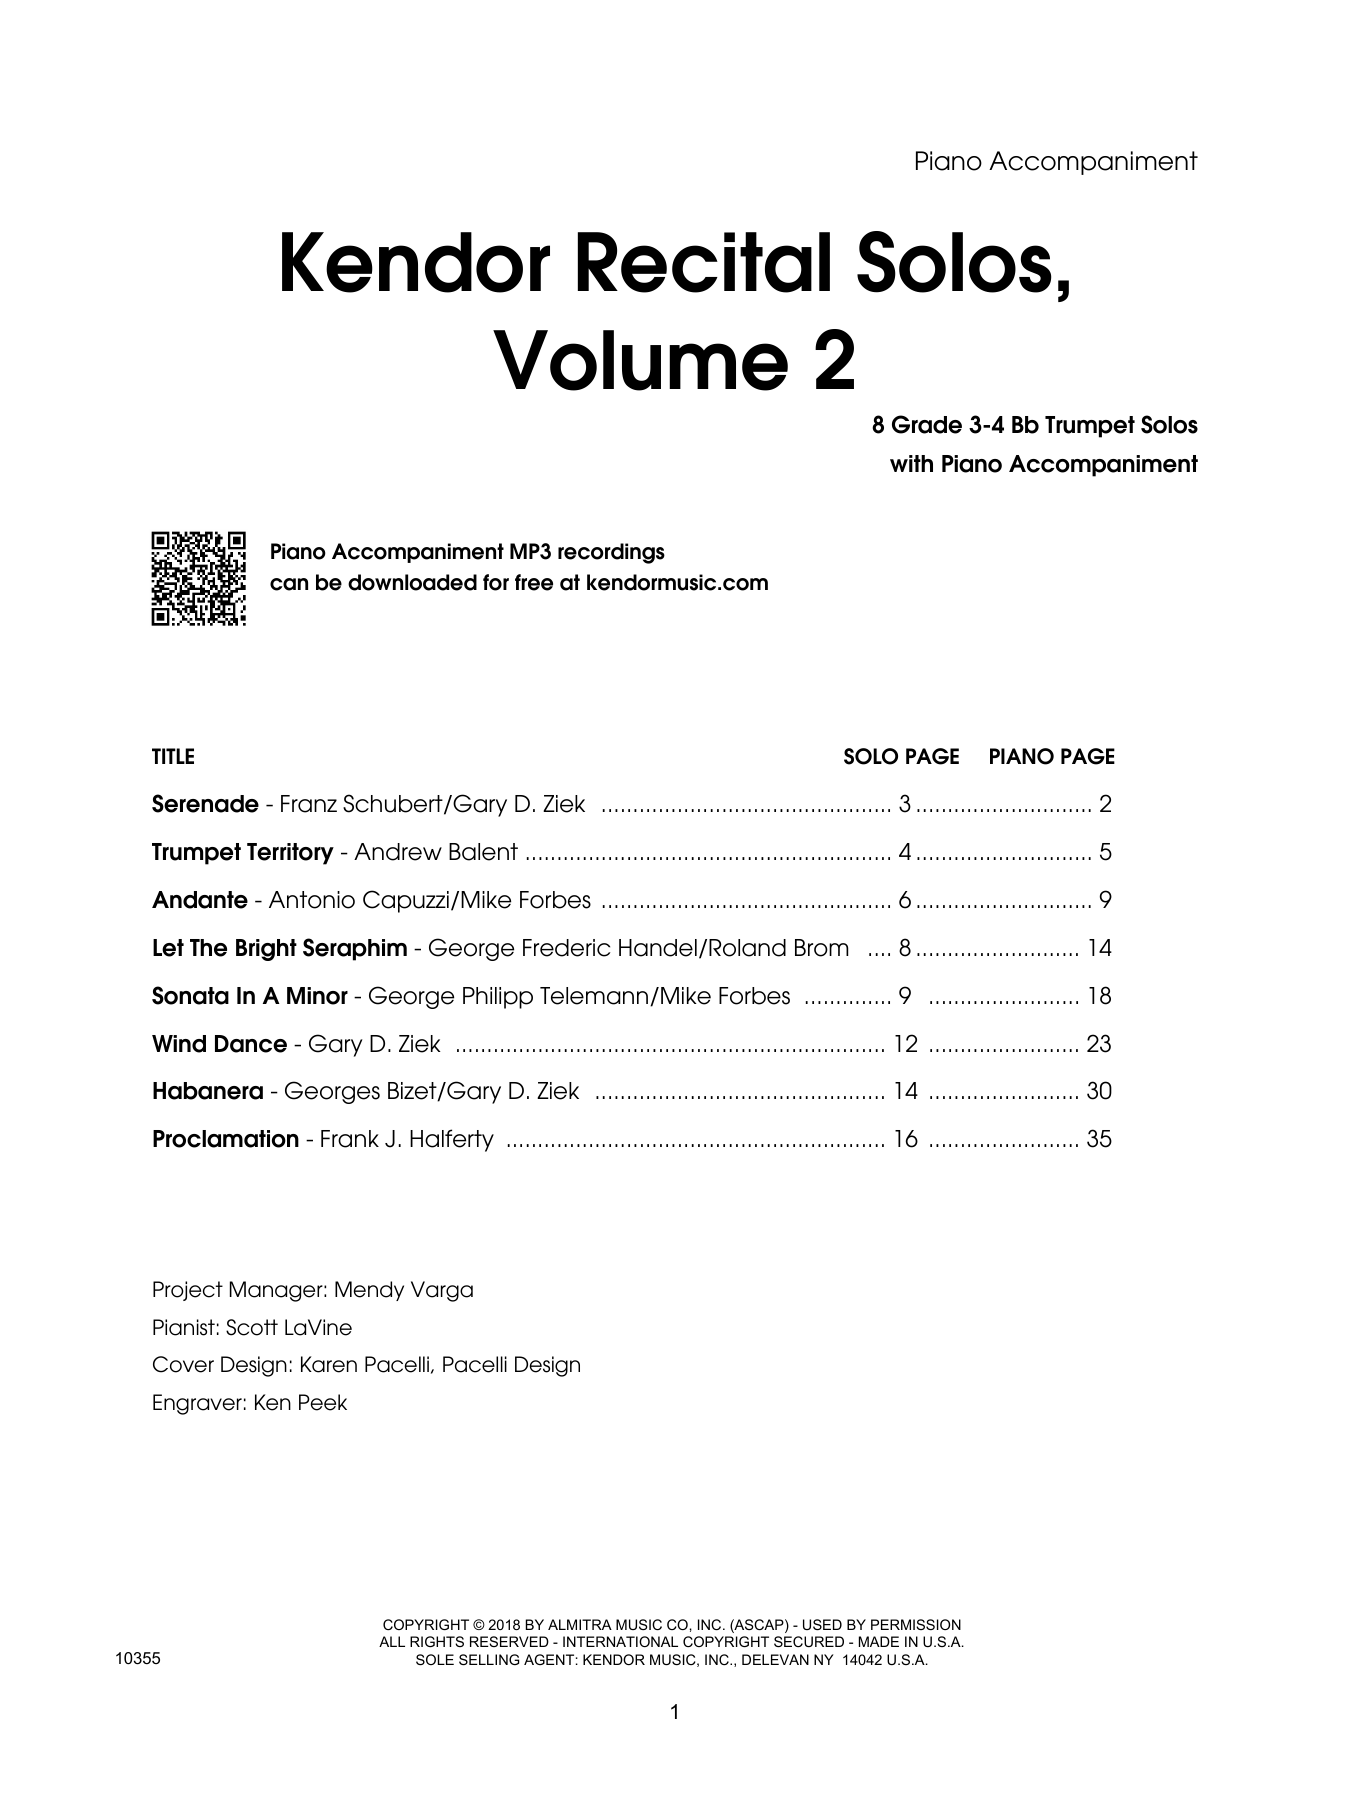 Download Various Kendor Recital Solos, Volume 2 - Bb Tru Sheet Music